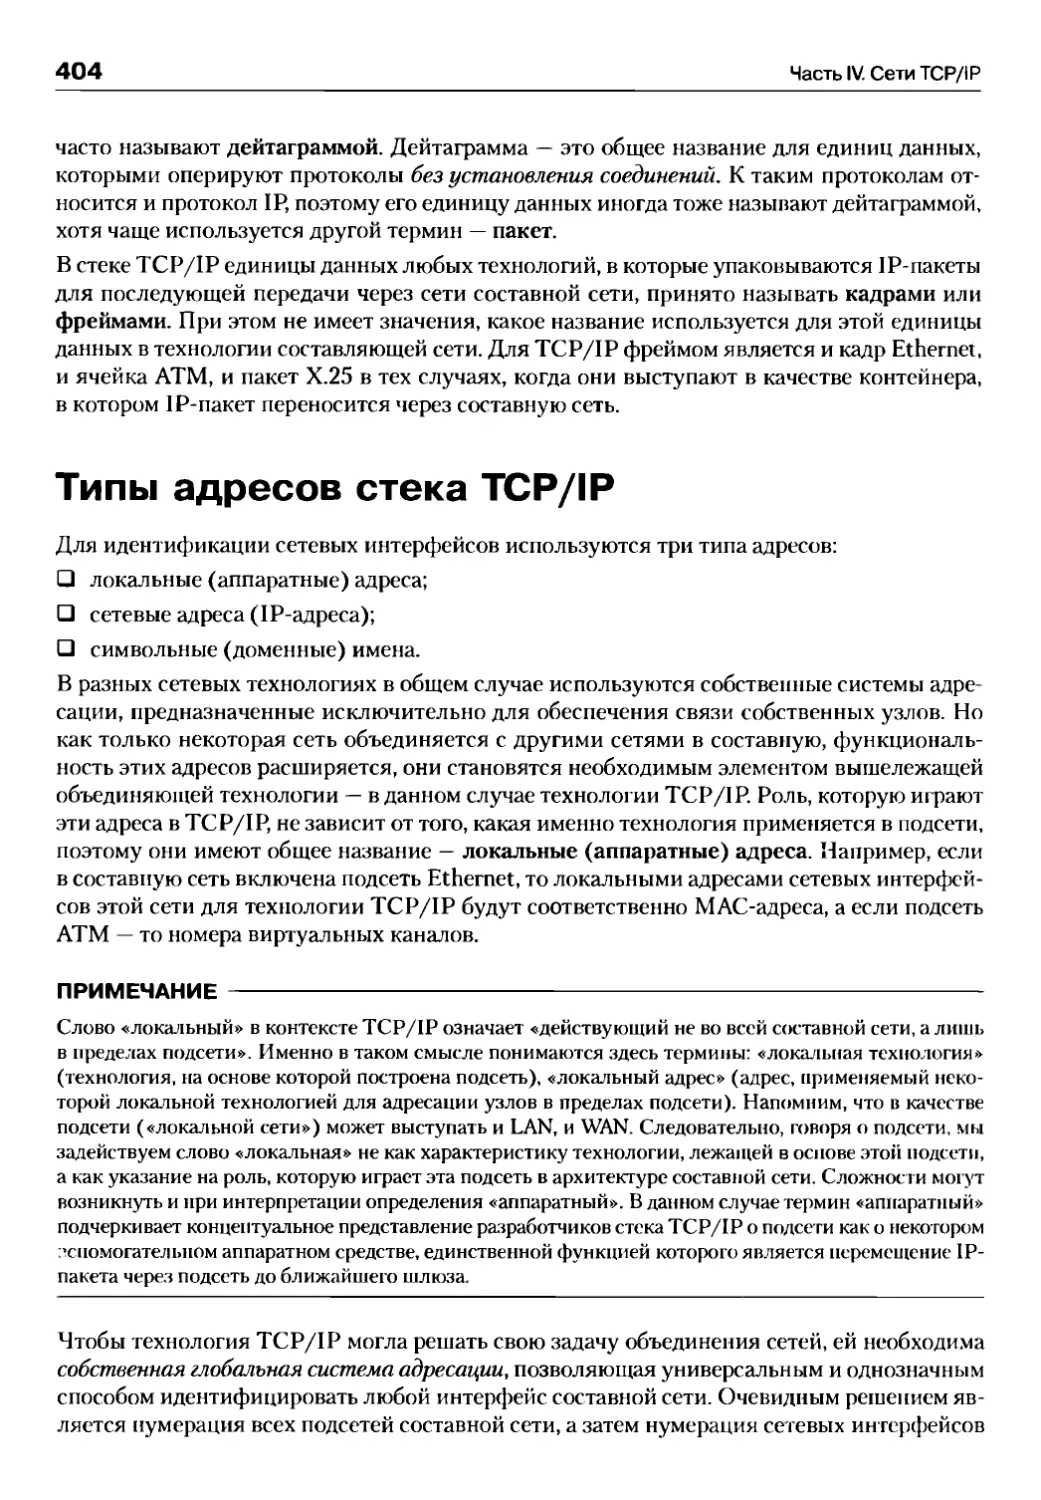 Типы адресов стека TCP/IP